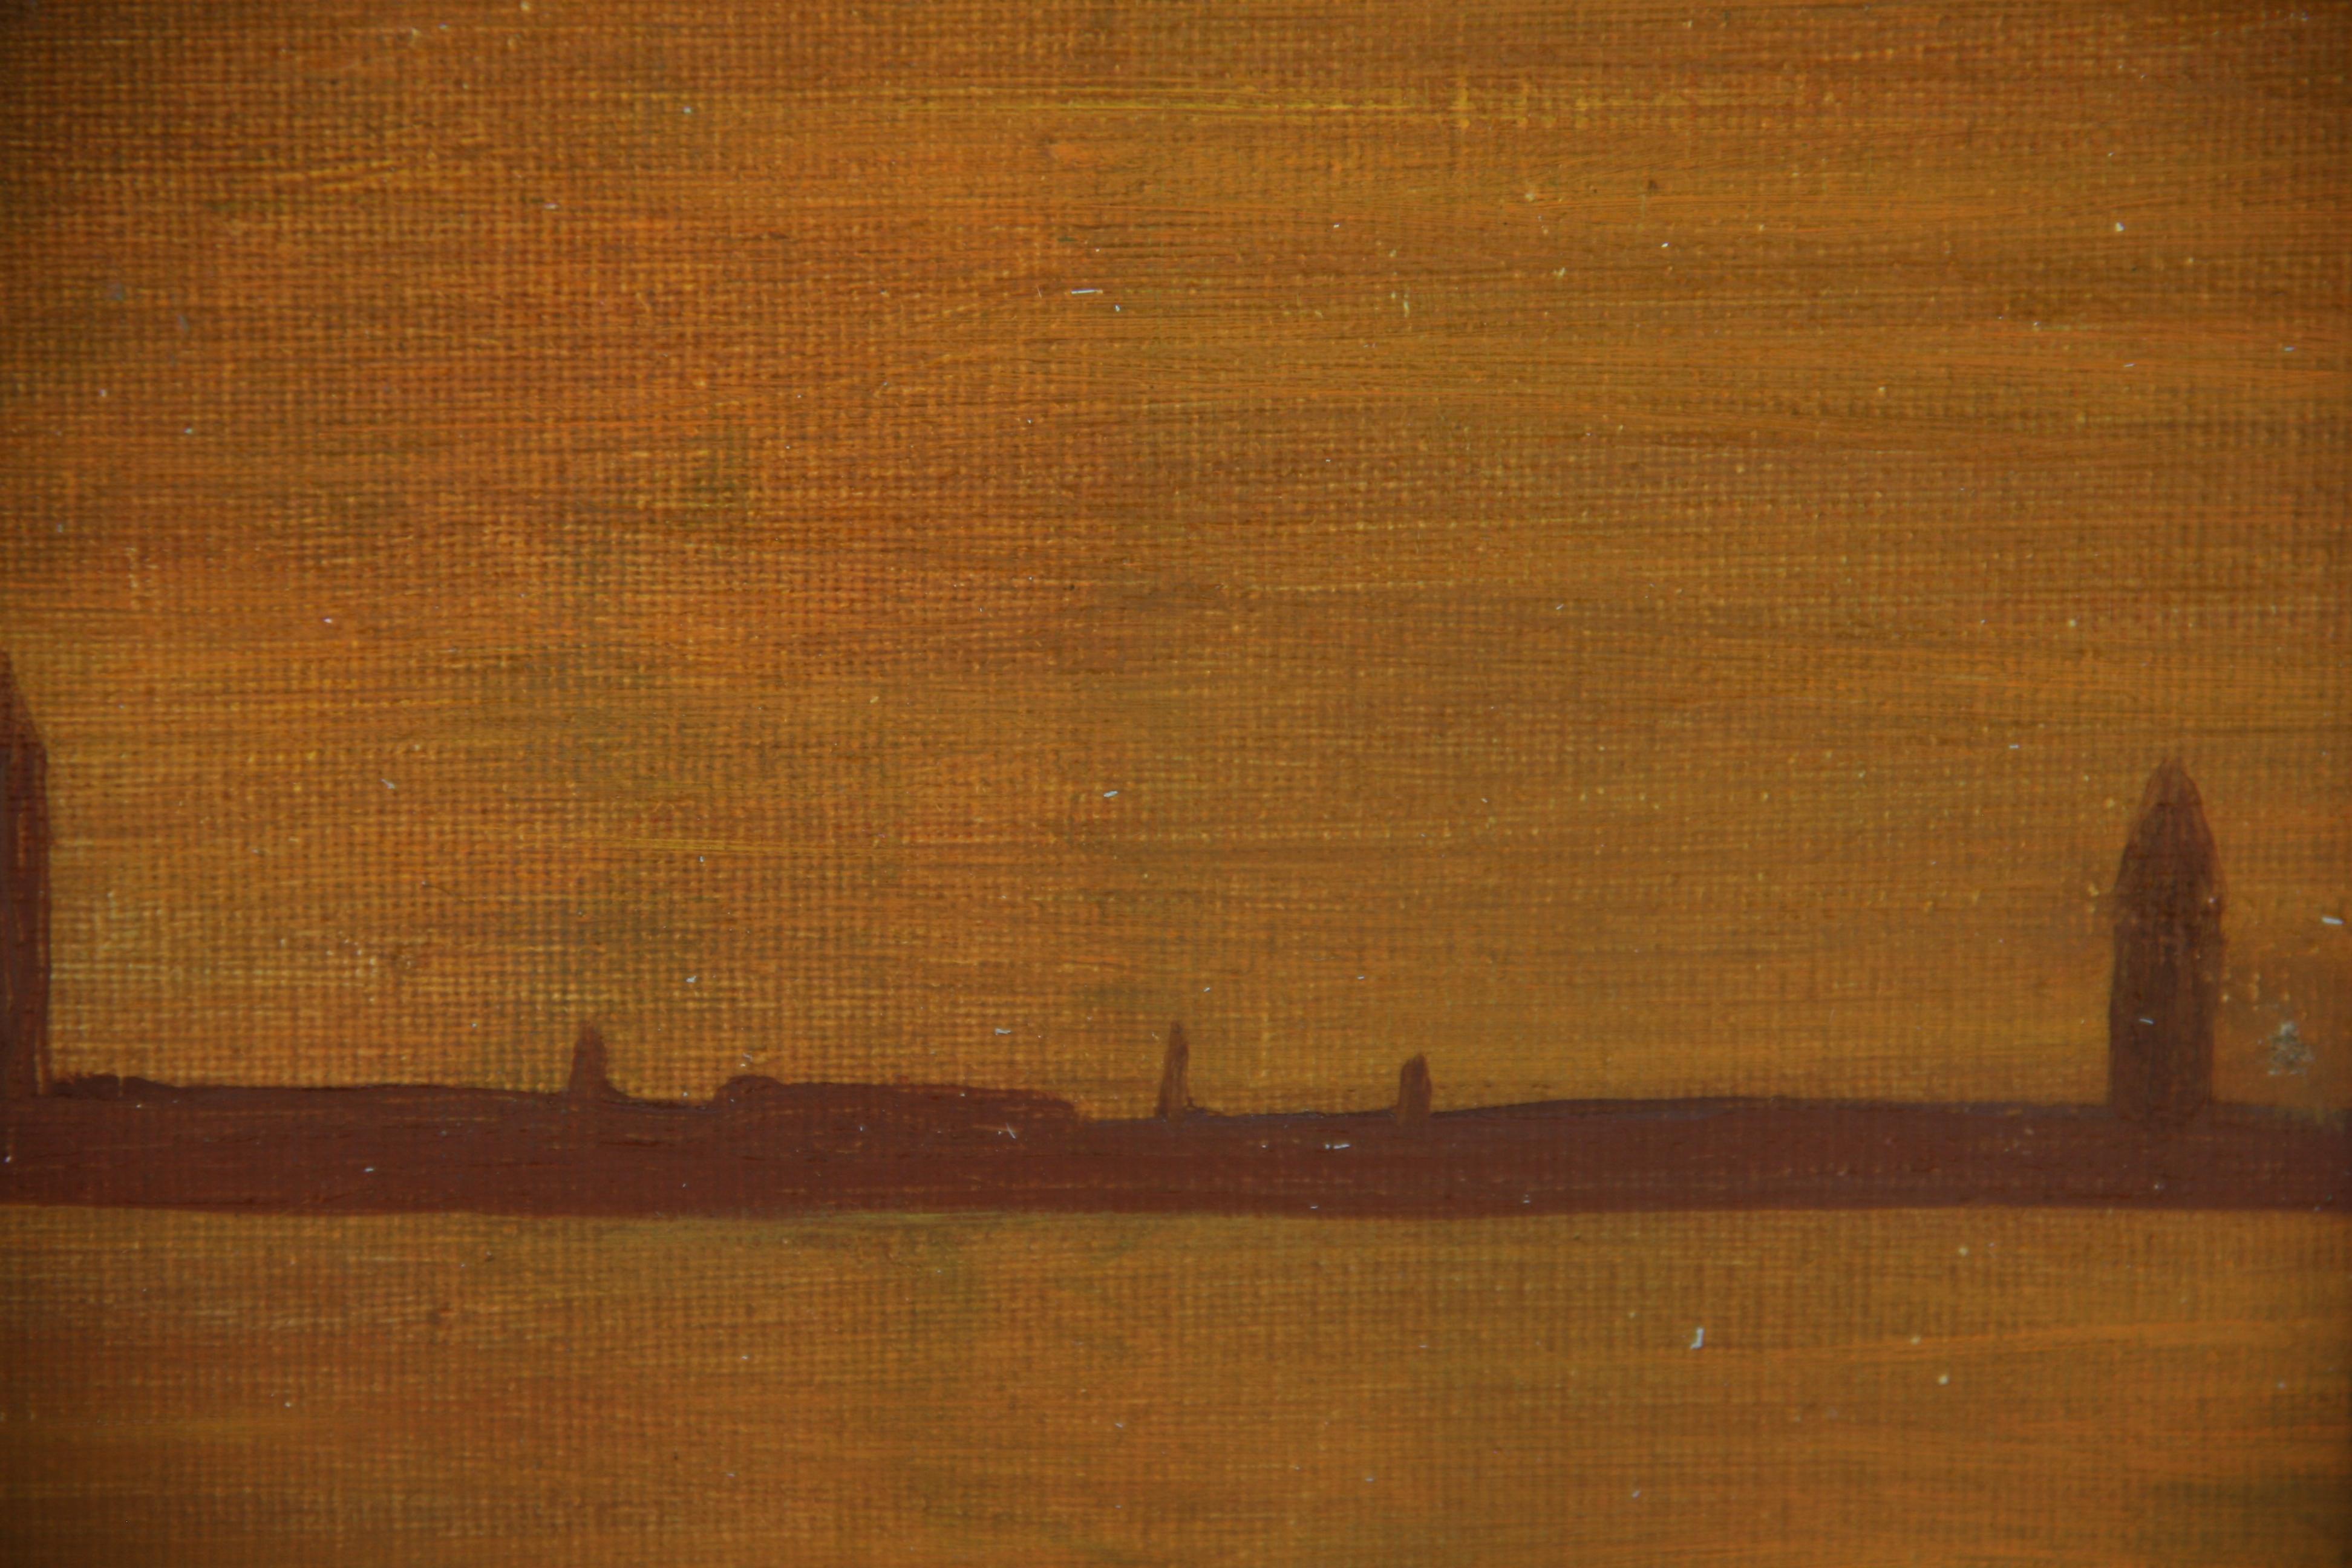 3778 Venice oil on board landscape
Image size 7.75x9.75